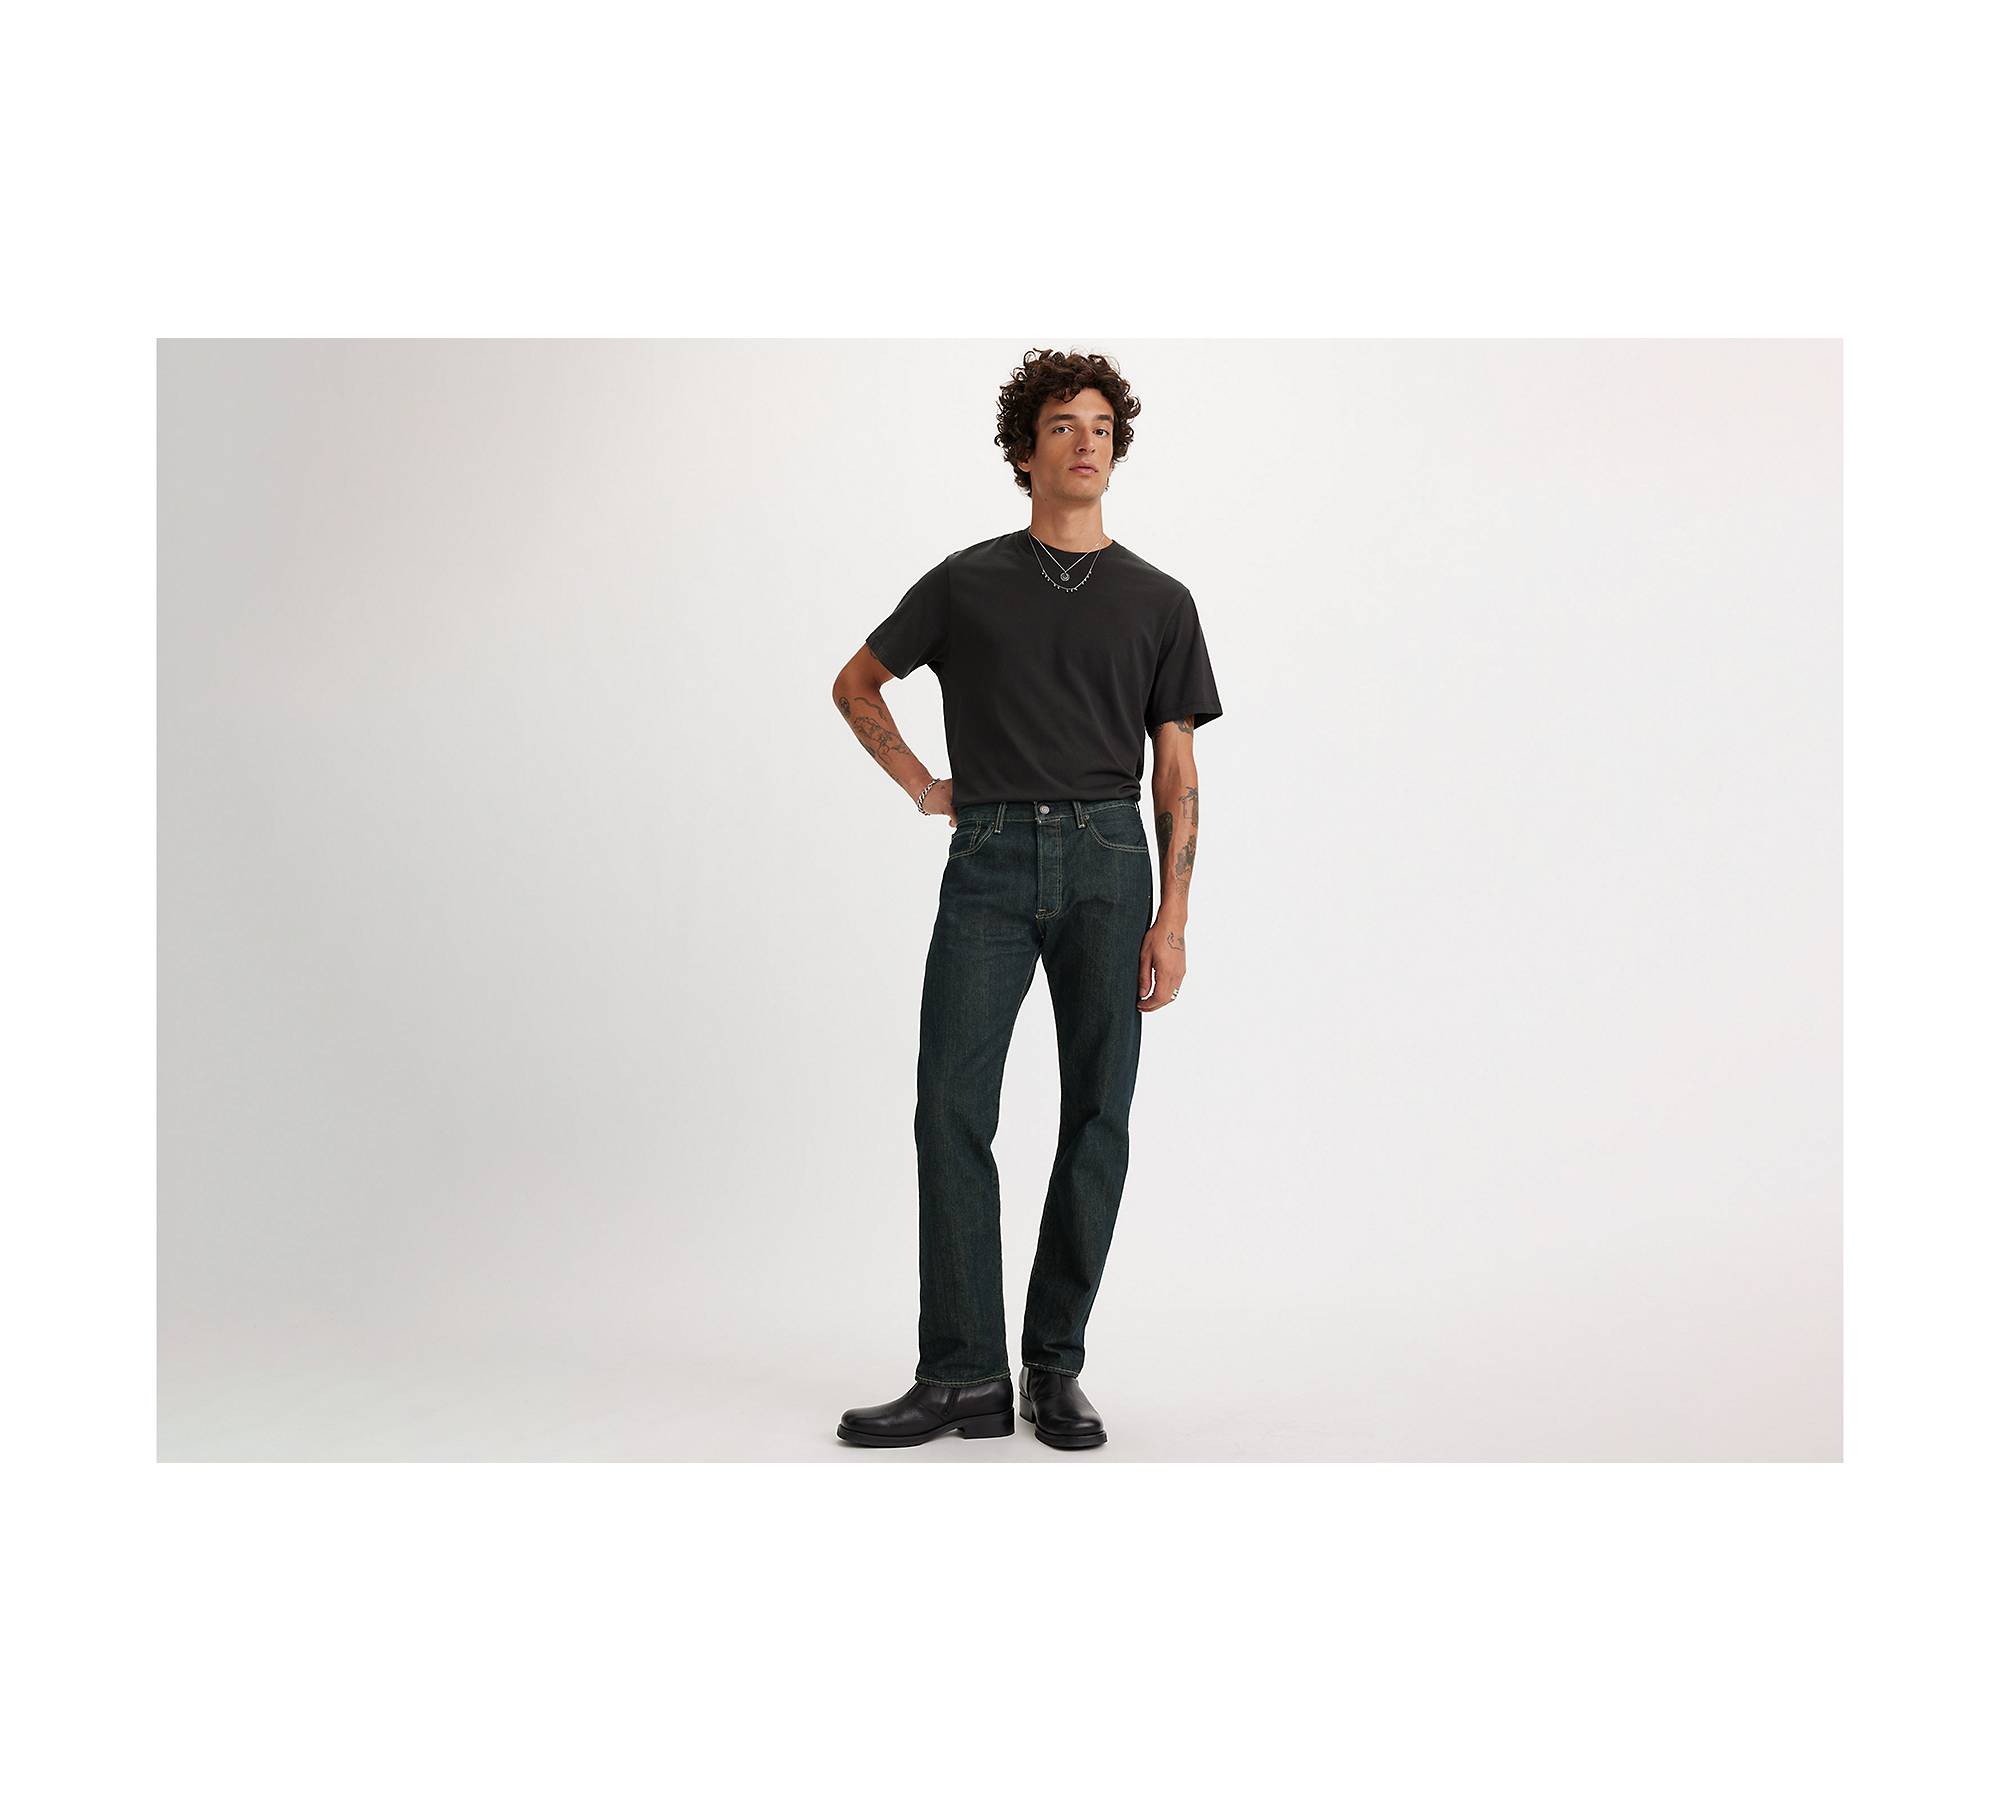 Levis® 501 Mens Jeans Denim Dark Wash Blue Pants Original Fit Straight Leg